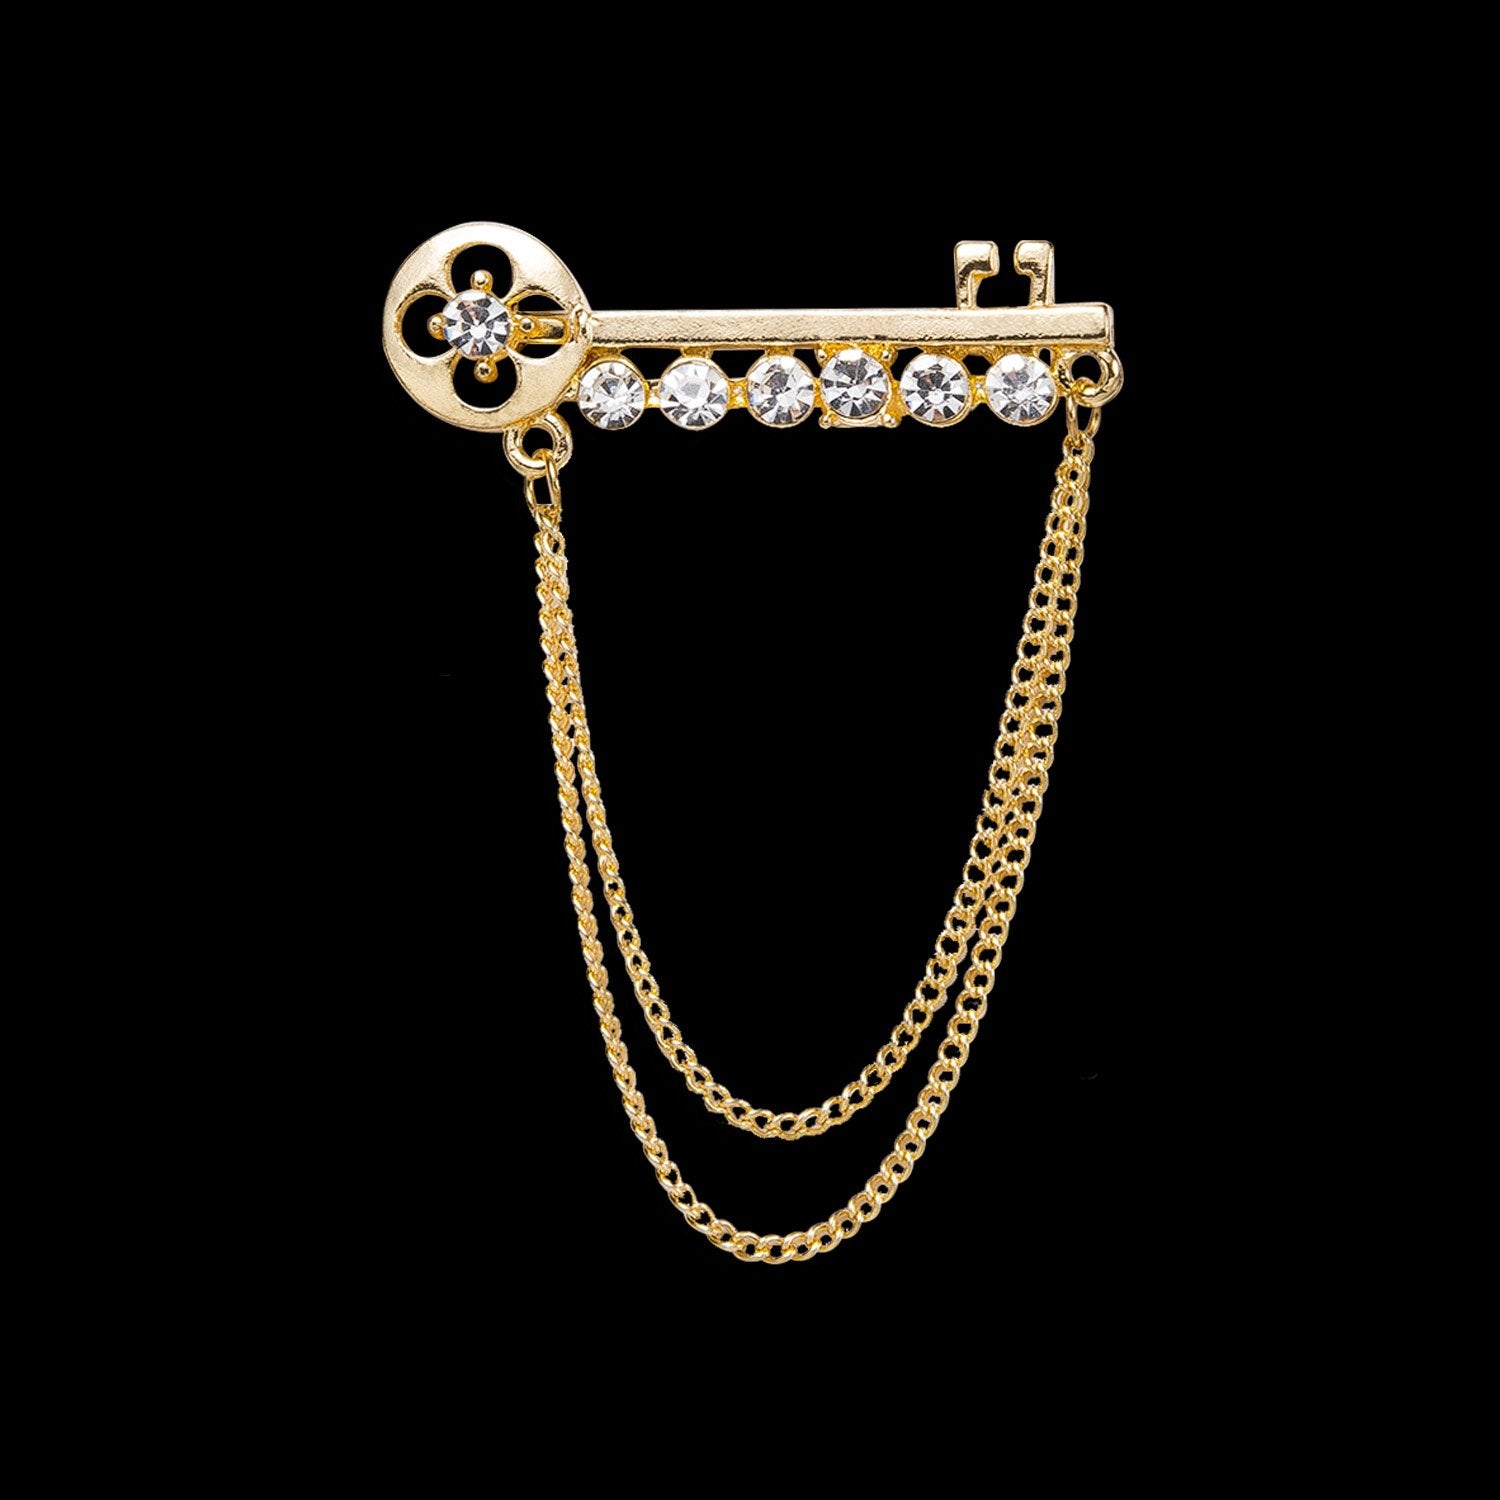 Barry.wang Men's Tie Accessories Novelty Alloy Metal Flower Key Diamond Lapel Pin